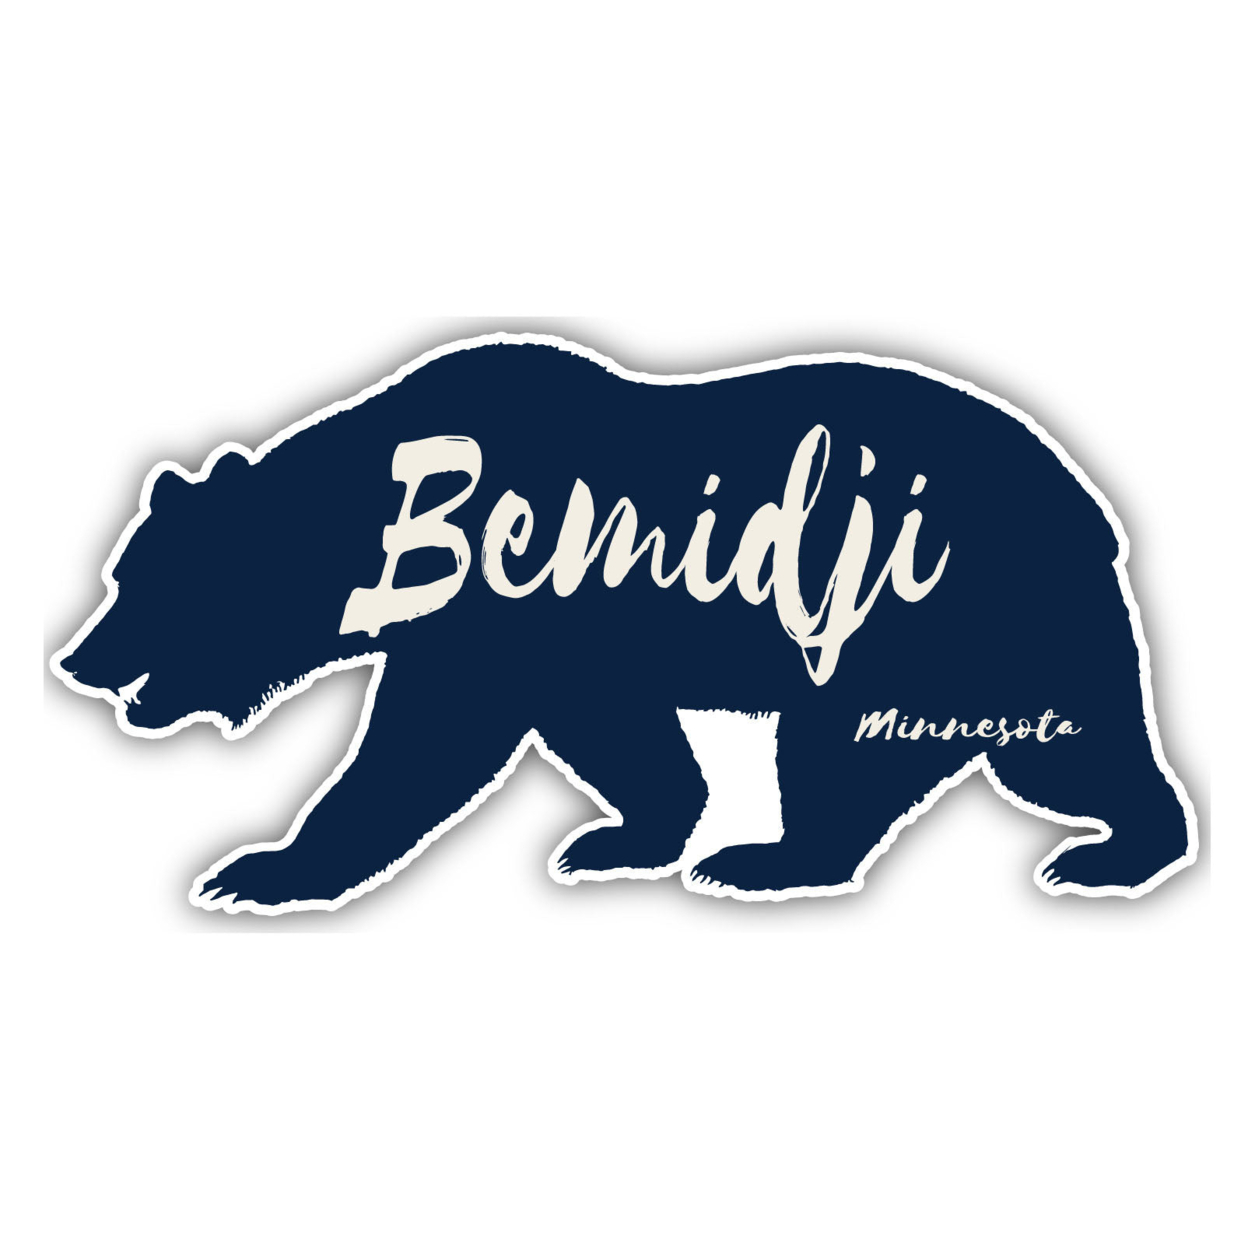 Bemidji Minnesota Souvenir Decorative Stickers (Choose Theme And Size) - 4-Pack, 6-Inch, Tent